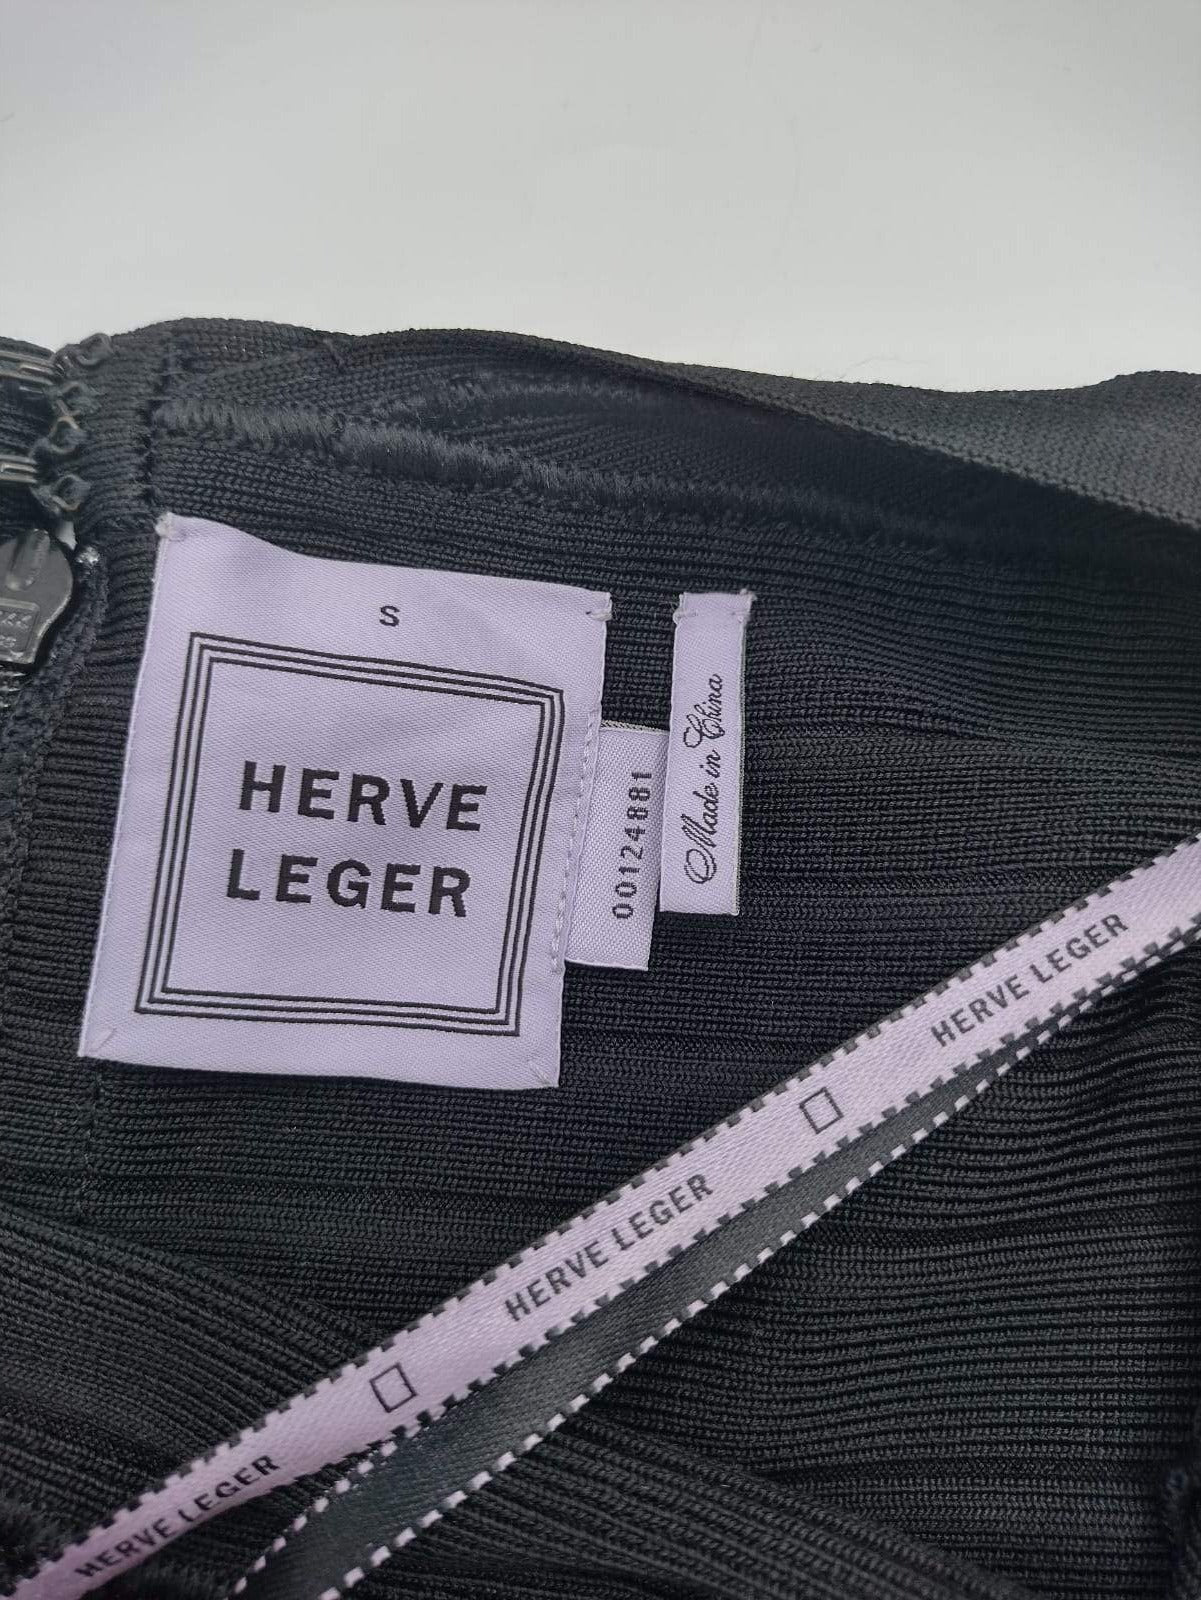 Hervé Leger bandage black dress size S